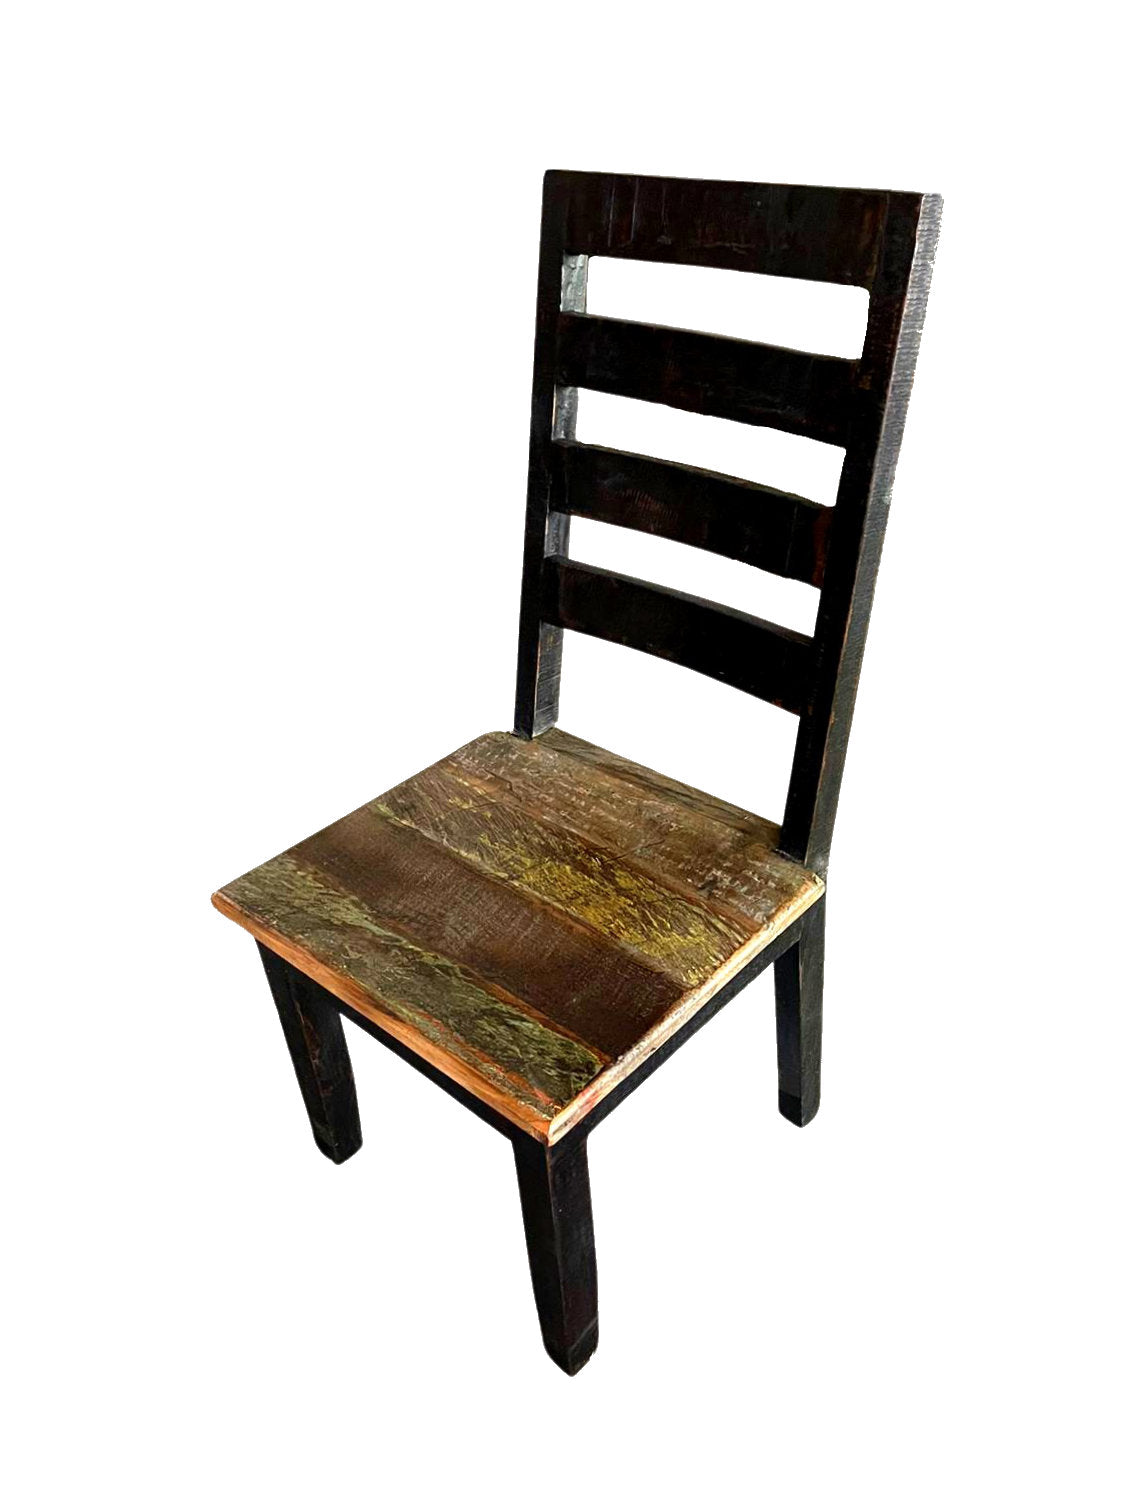 Milo Chair